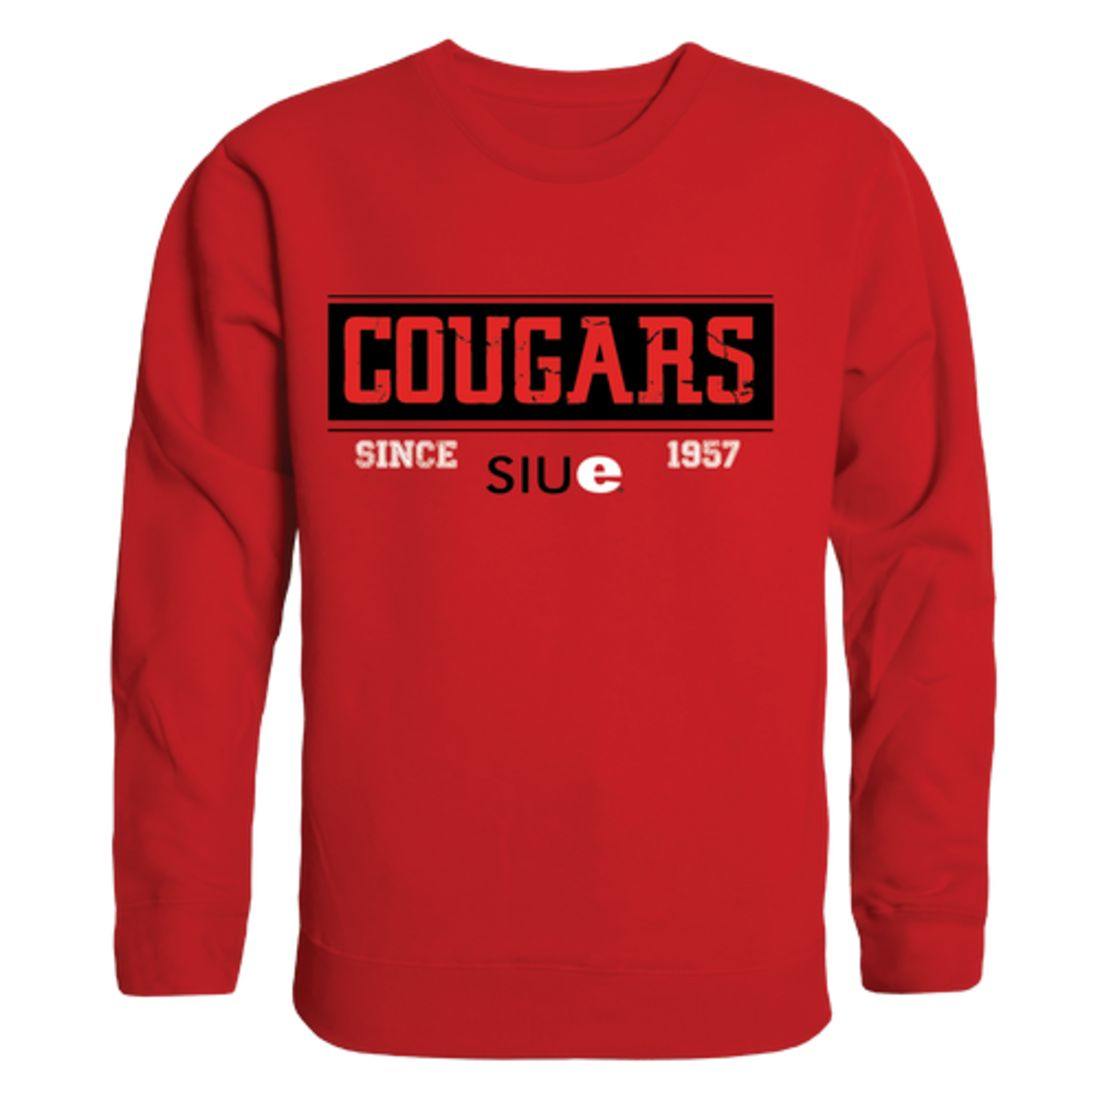 SIUE Southern Illinois University Edwardsville Cougars Established Crewneck Pullover Sweatshirt Sweater Red-Campus-Wardrobe